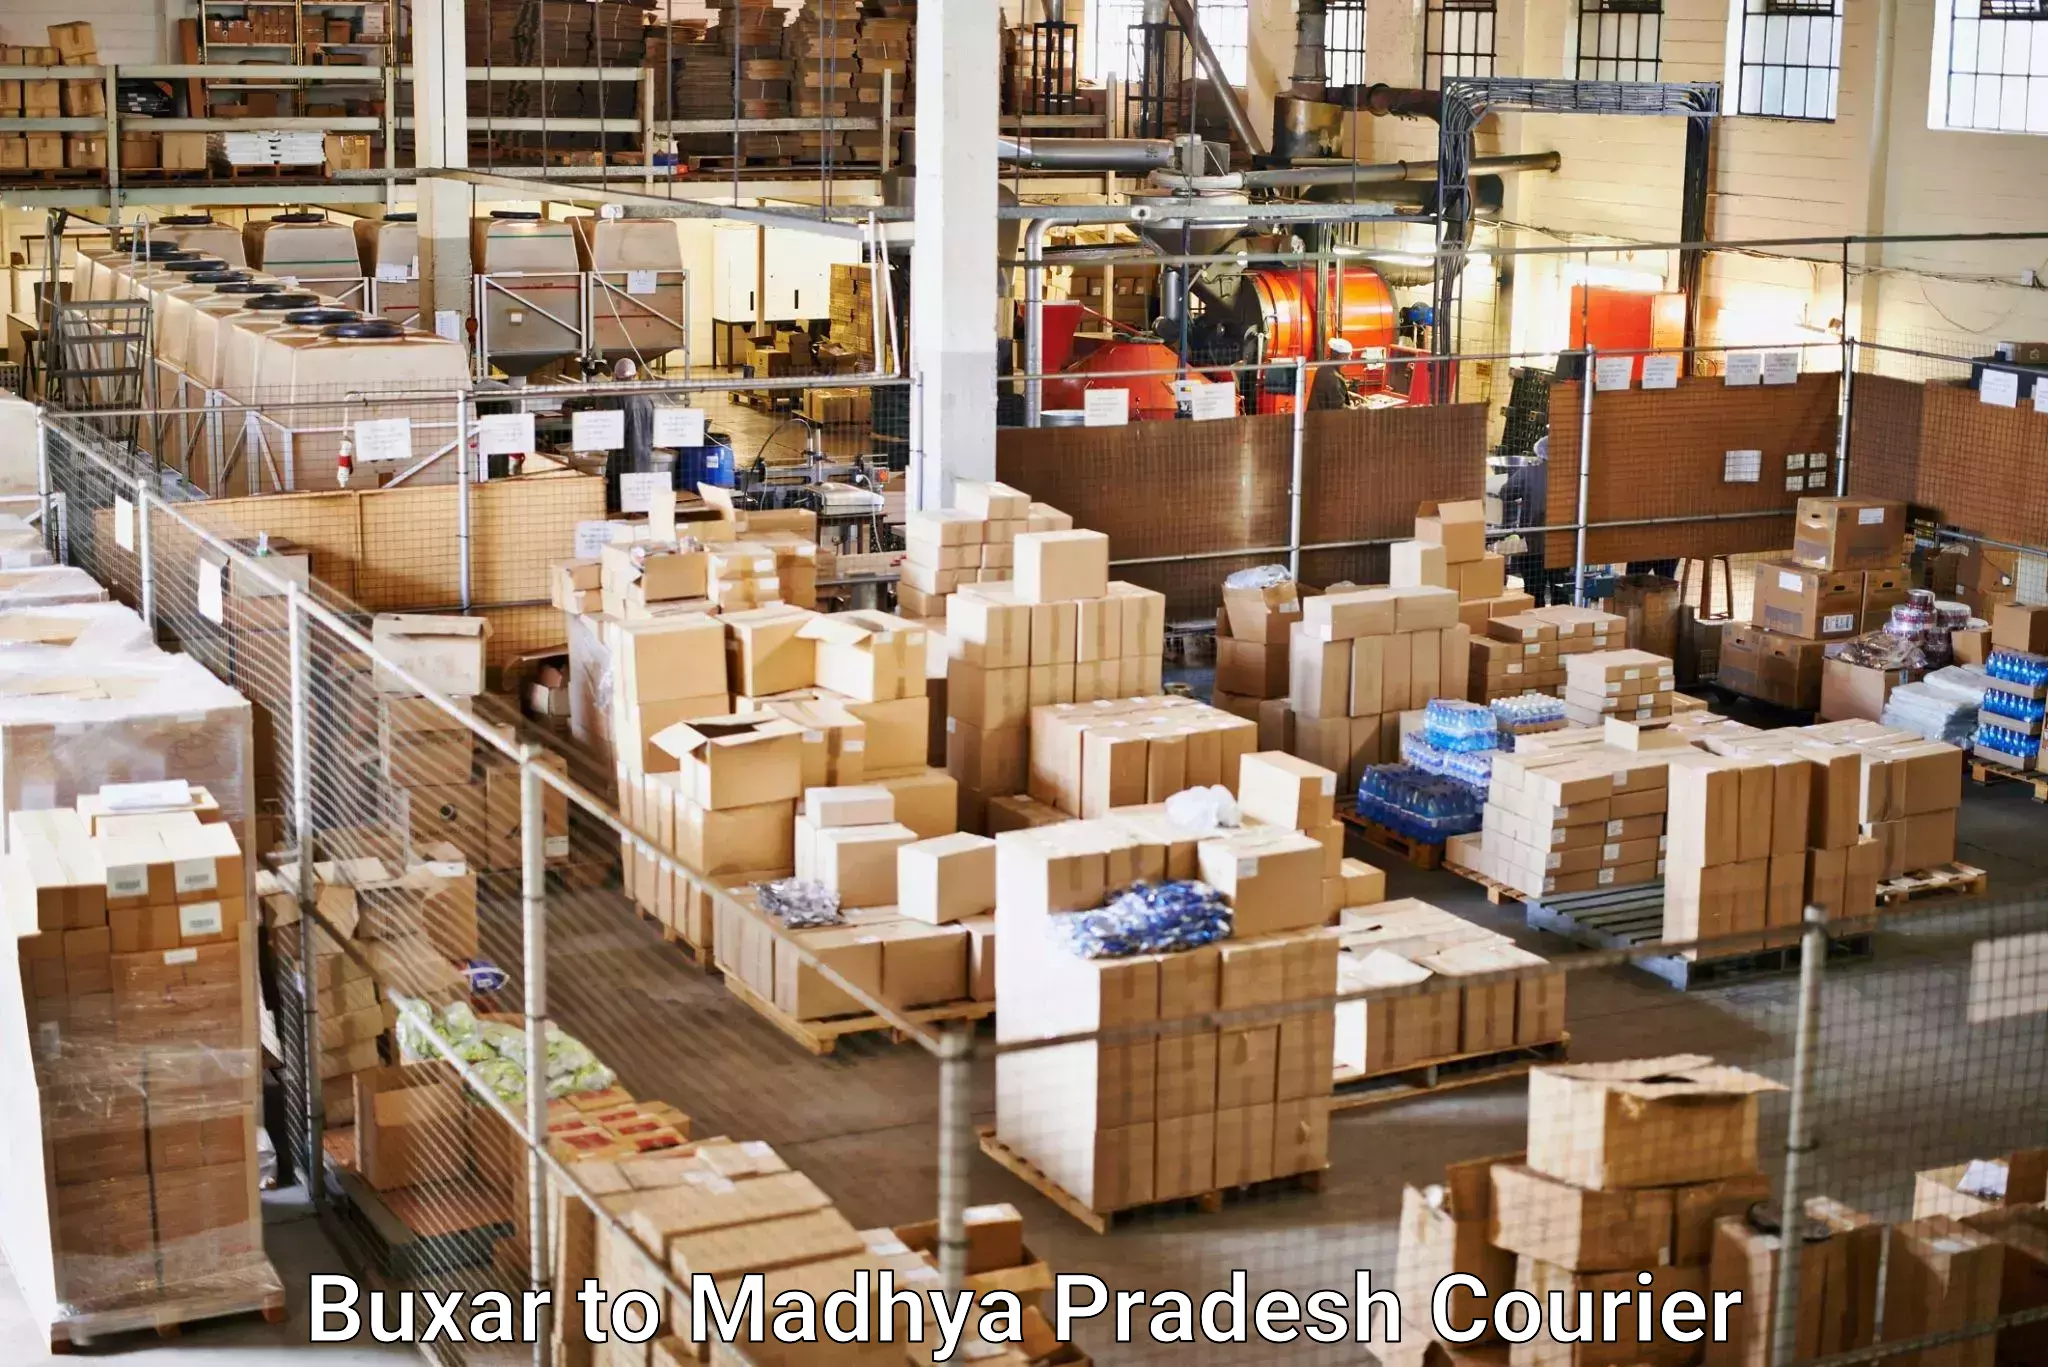 International parcel service Buxar to Alote